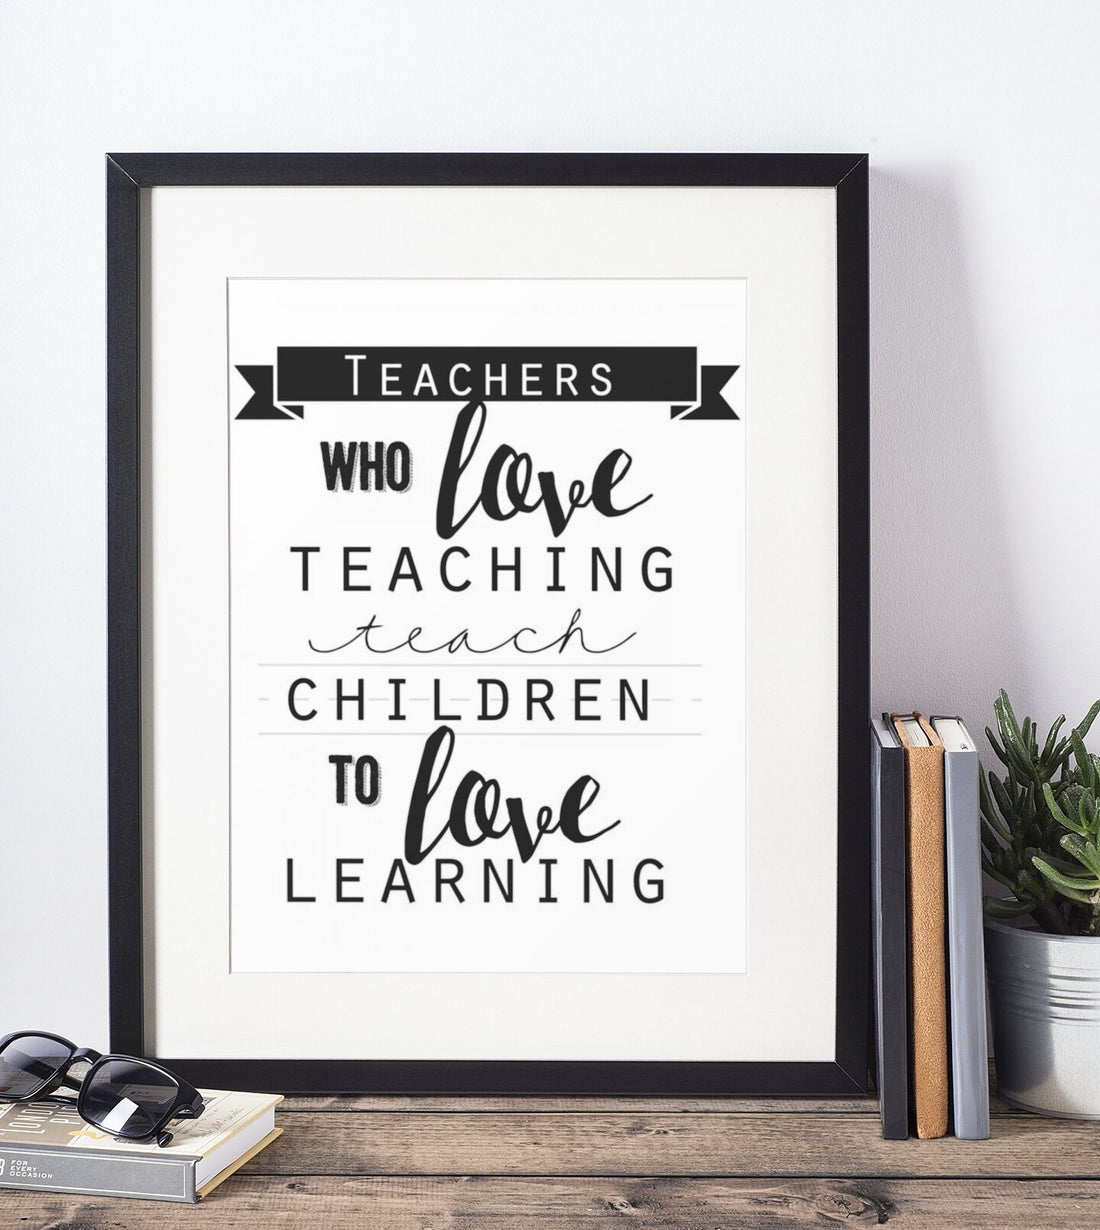 Teacher Classroom Poster - Back To School, Teachers Who Love Teaching, Decorate Classroom